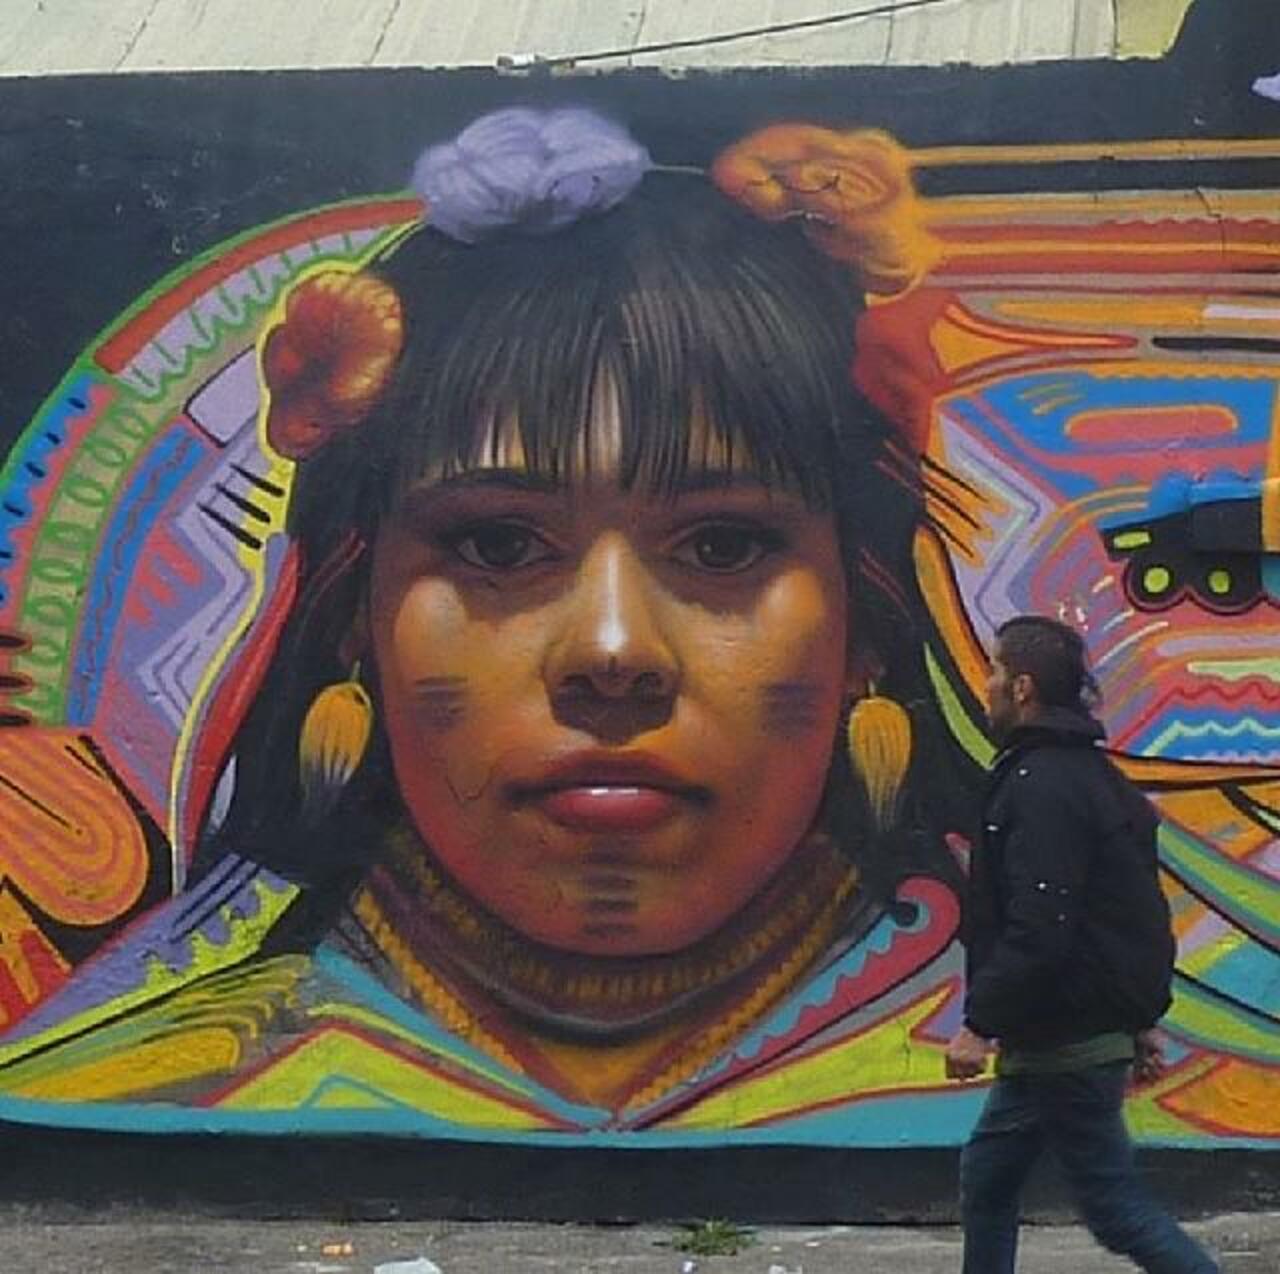 RT "@GoogleStreetArt: Street Art by the artist Daniel Cortez 

#art #mural #graffiti #streetart http://t.co/WJWjQTuRap"